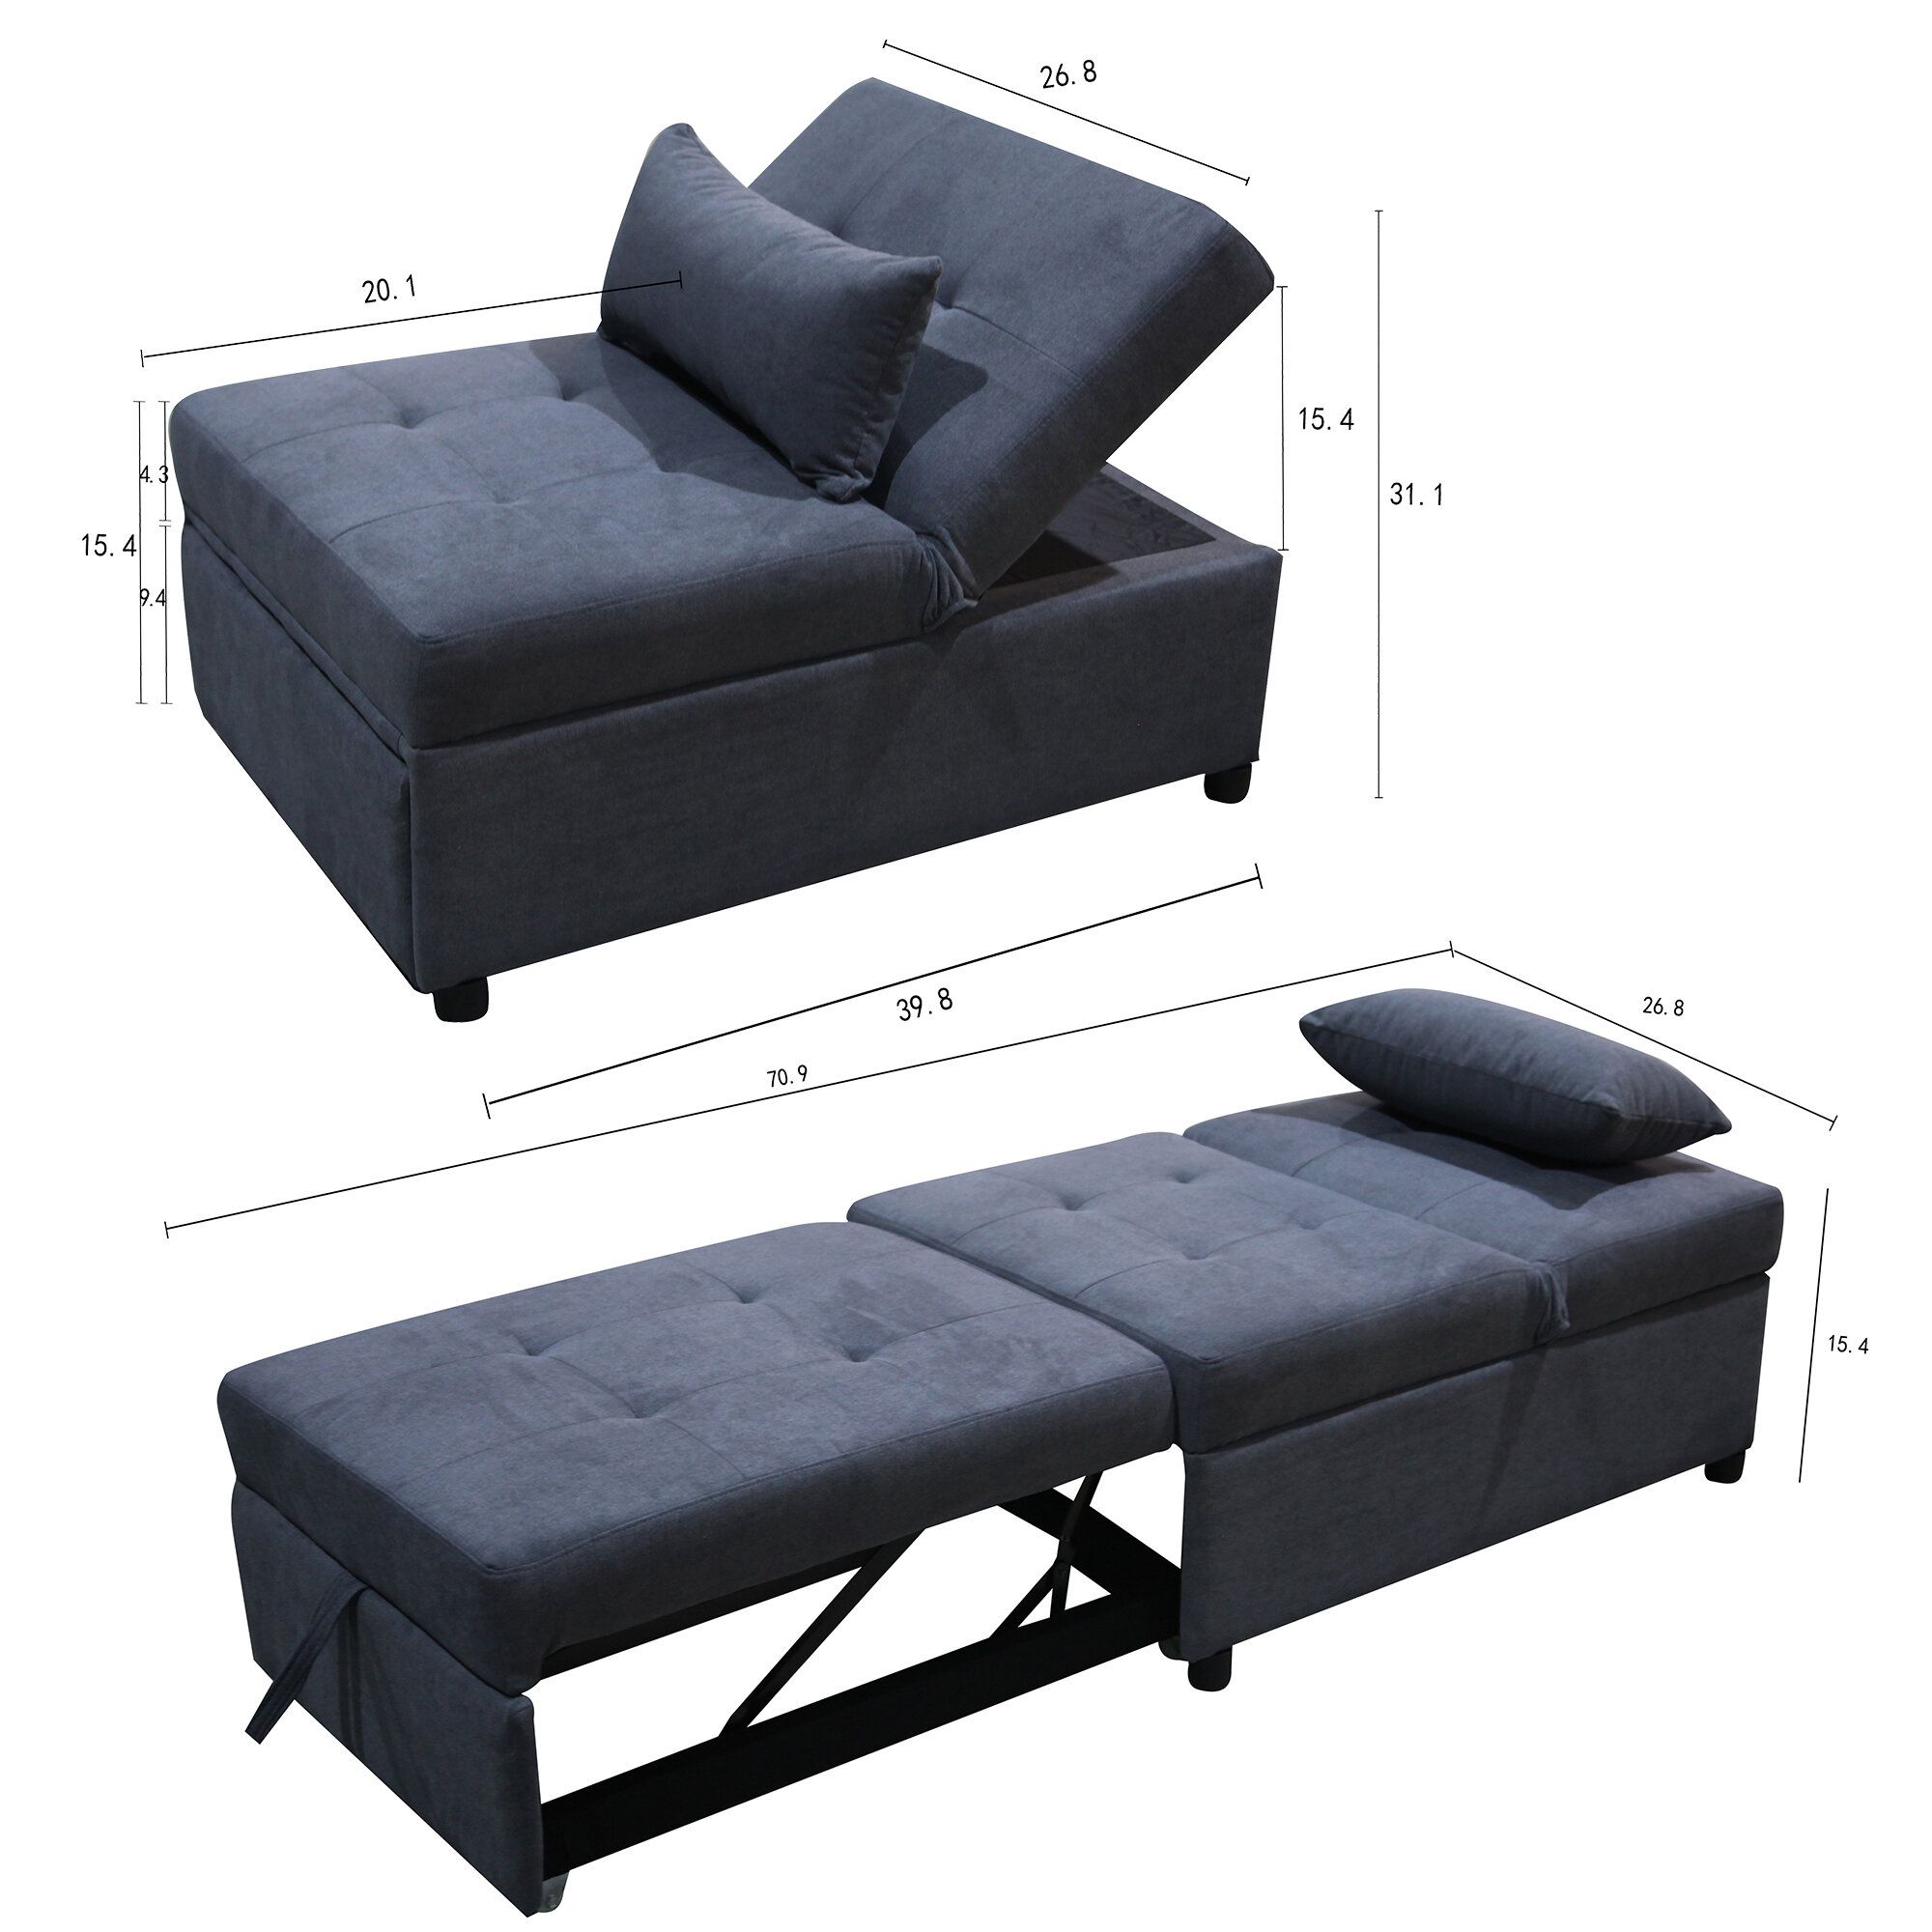 Latitude Run® Folding Ottoman Sleeper Leisure Bed, 4 In 1 Multi Function  Adjustable Ottoman Bench Guest Sofa Chair Sofa Bed | Wayfair Regarding 4 In 1 Convertible Sleeper Chair Beds (Photo 11 of 15)